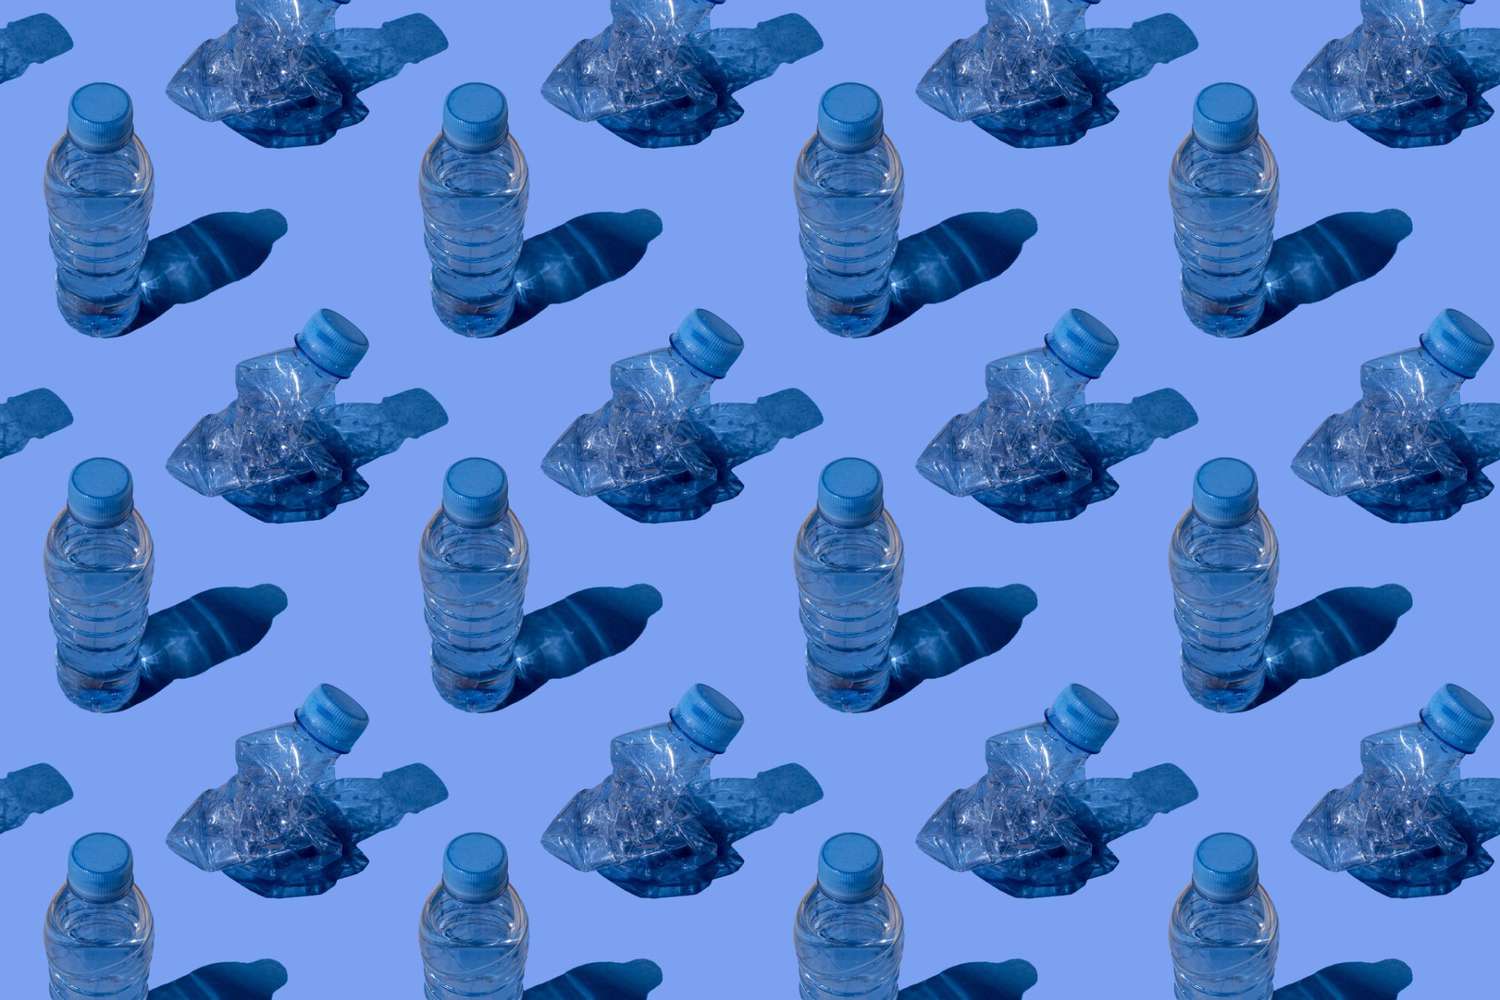 An image of plastic bottles on blue background.